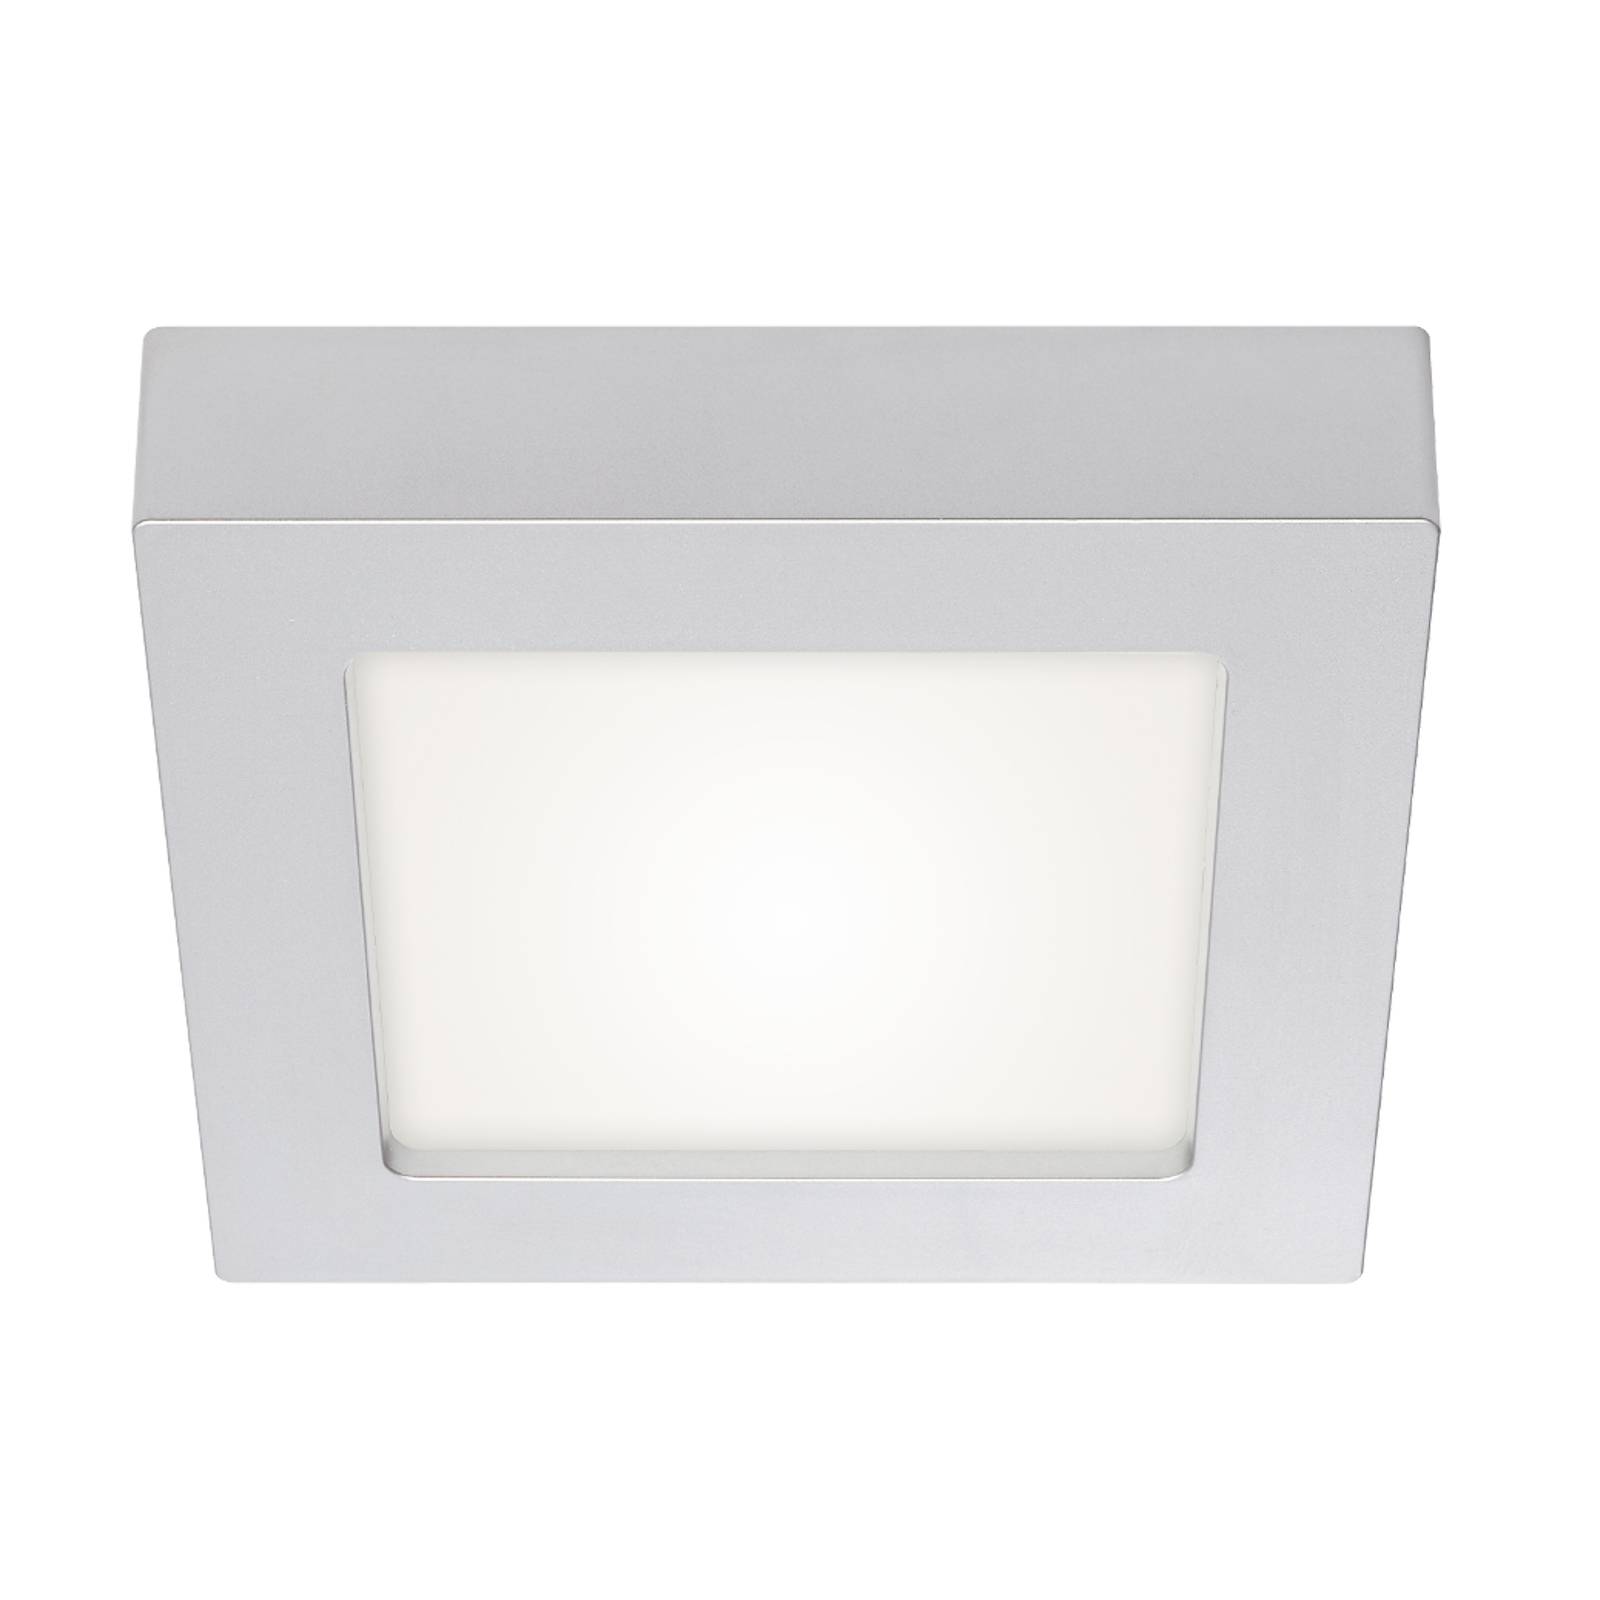 Prios Alette LED ceiling light, silver, 17.2 cm